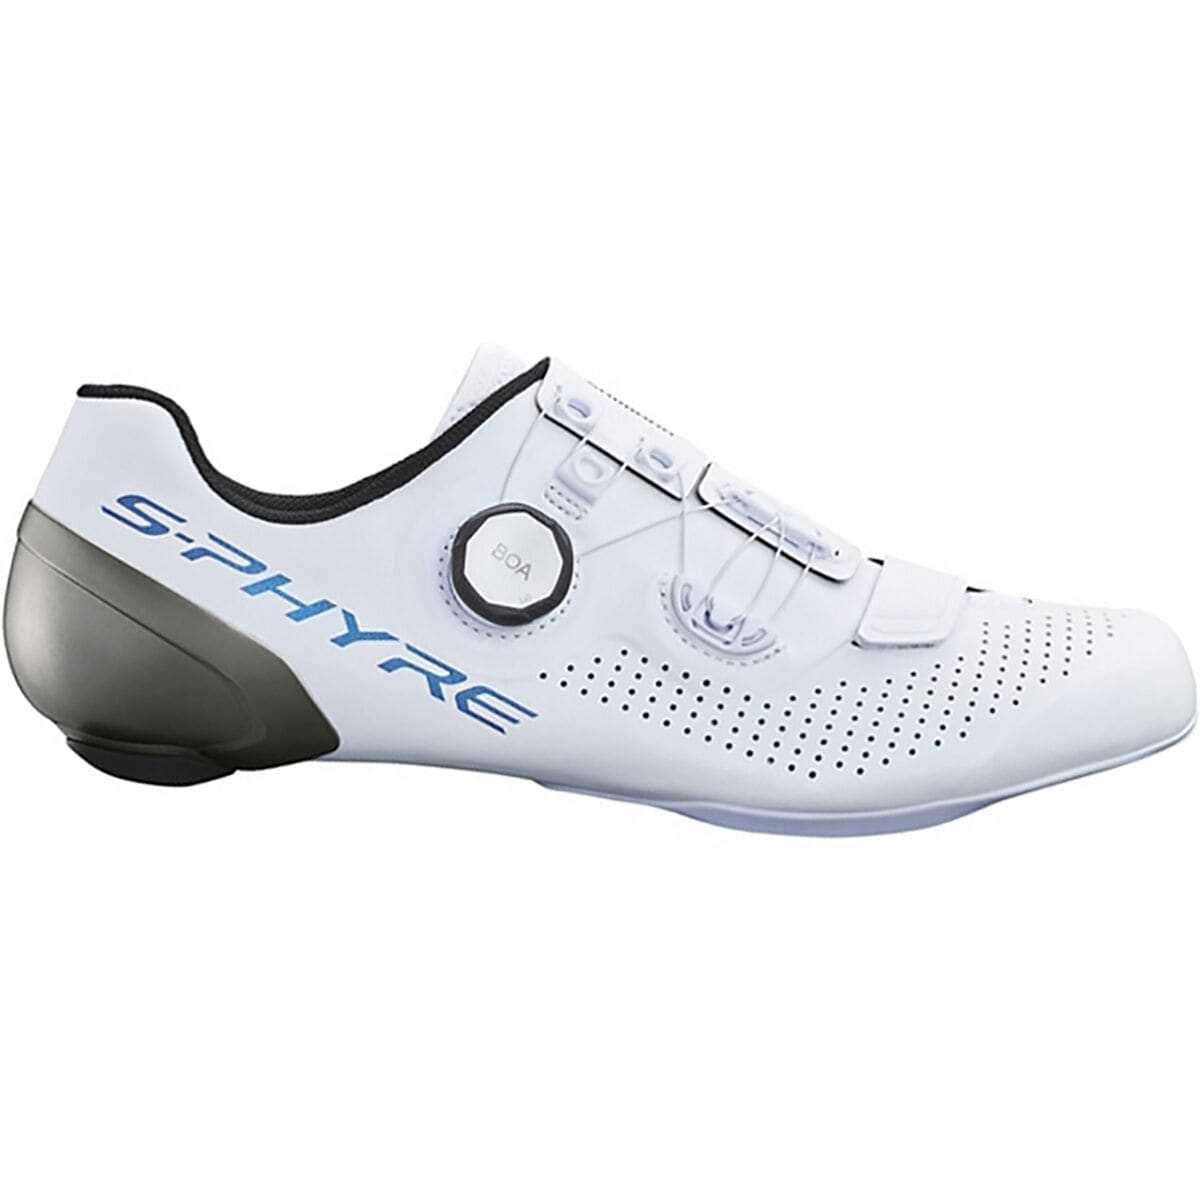 S-Phyre RC902T Cycling Shoe - Men's